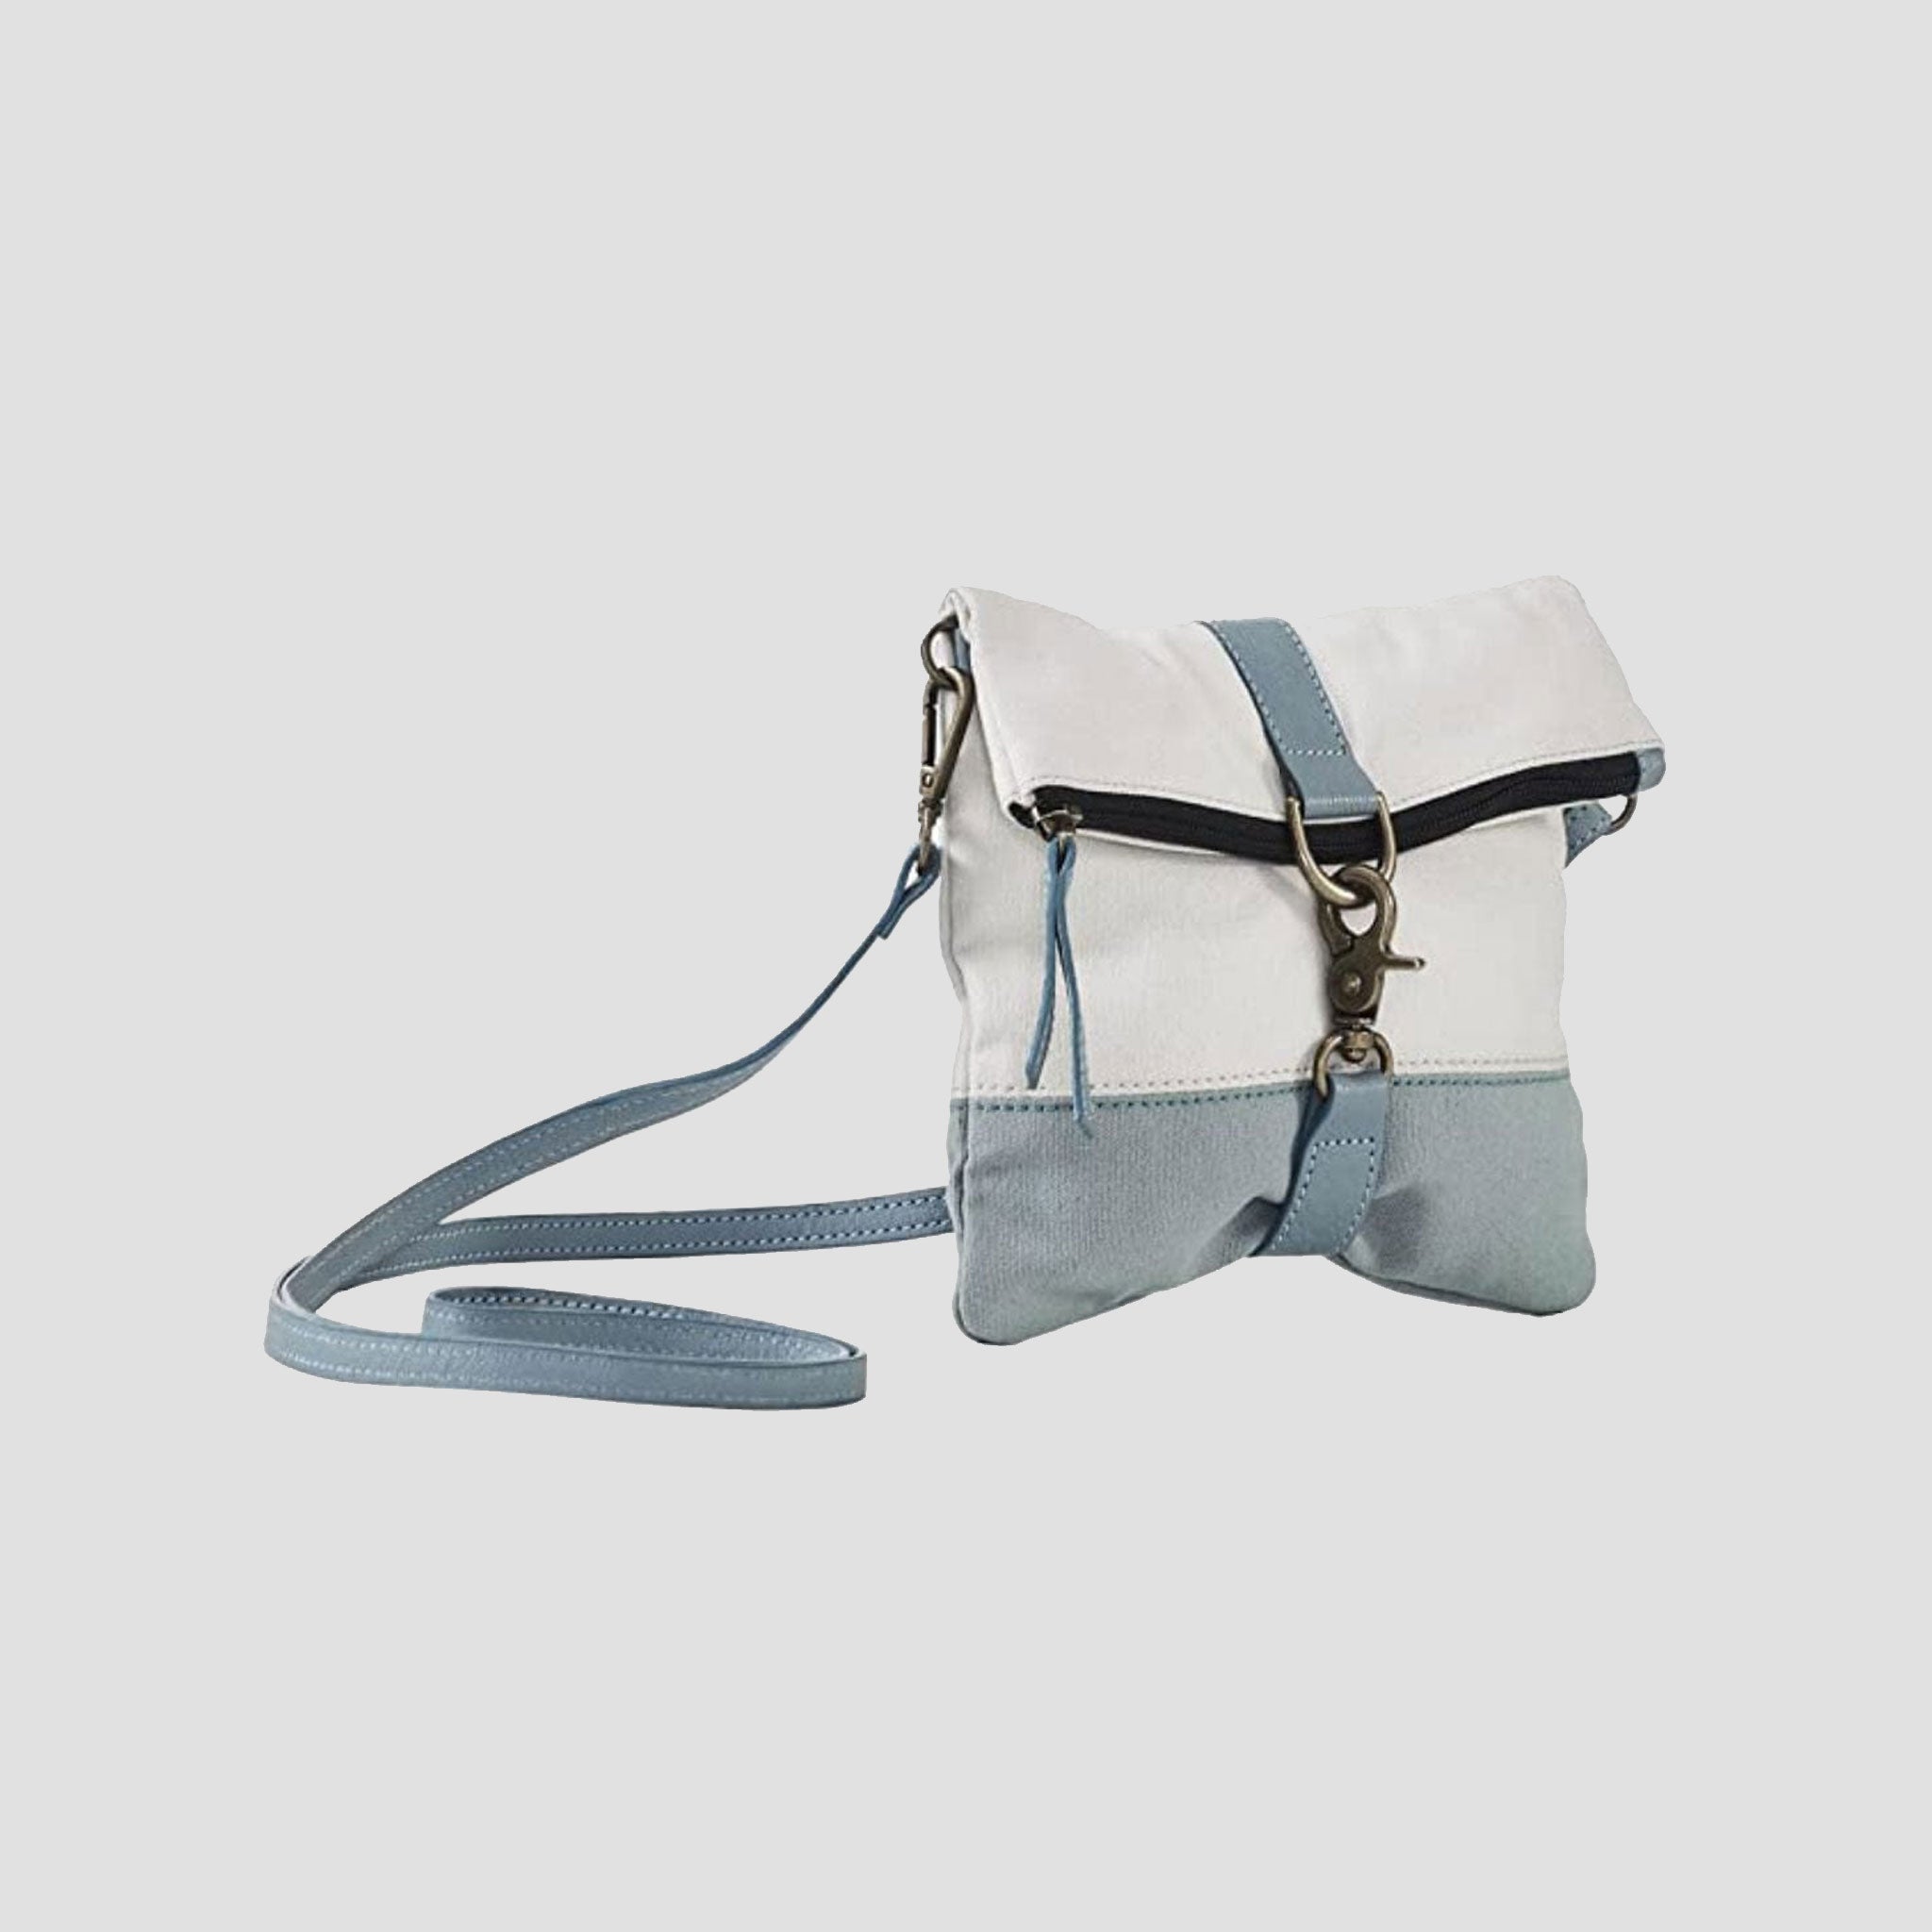 Mona B Women's and Girls Finley Canvas Bag Recycled Sling Bag (Ocean) (Blue) - Crossbody Sling Bag by Mona-B - Backpack, EOSS, Flash Sale, Sale, Shop1999, Shop2999, Shop3999